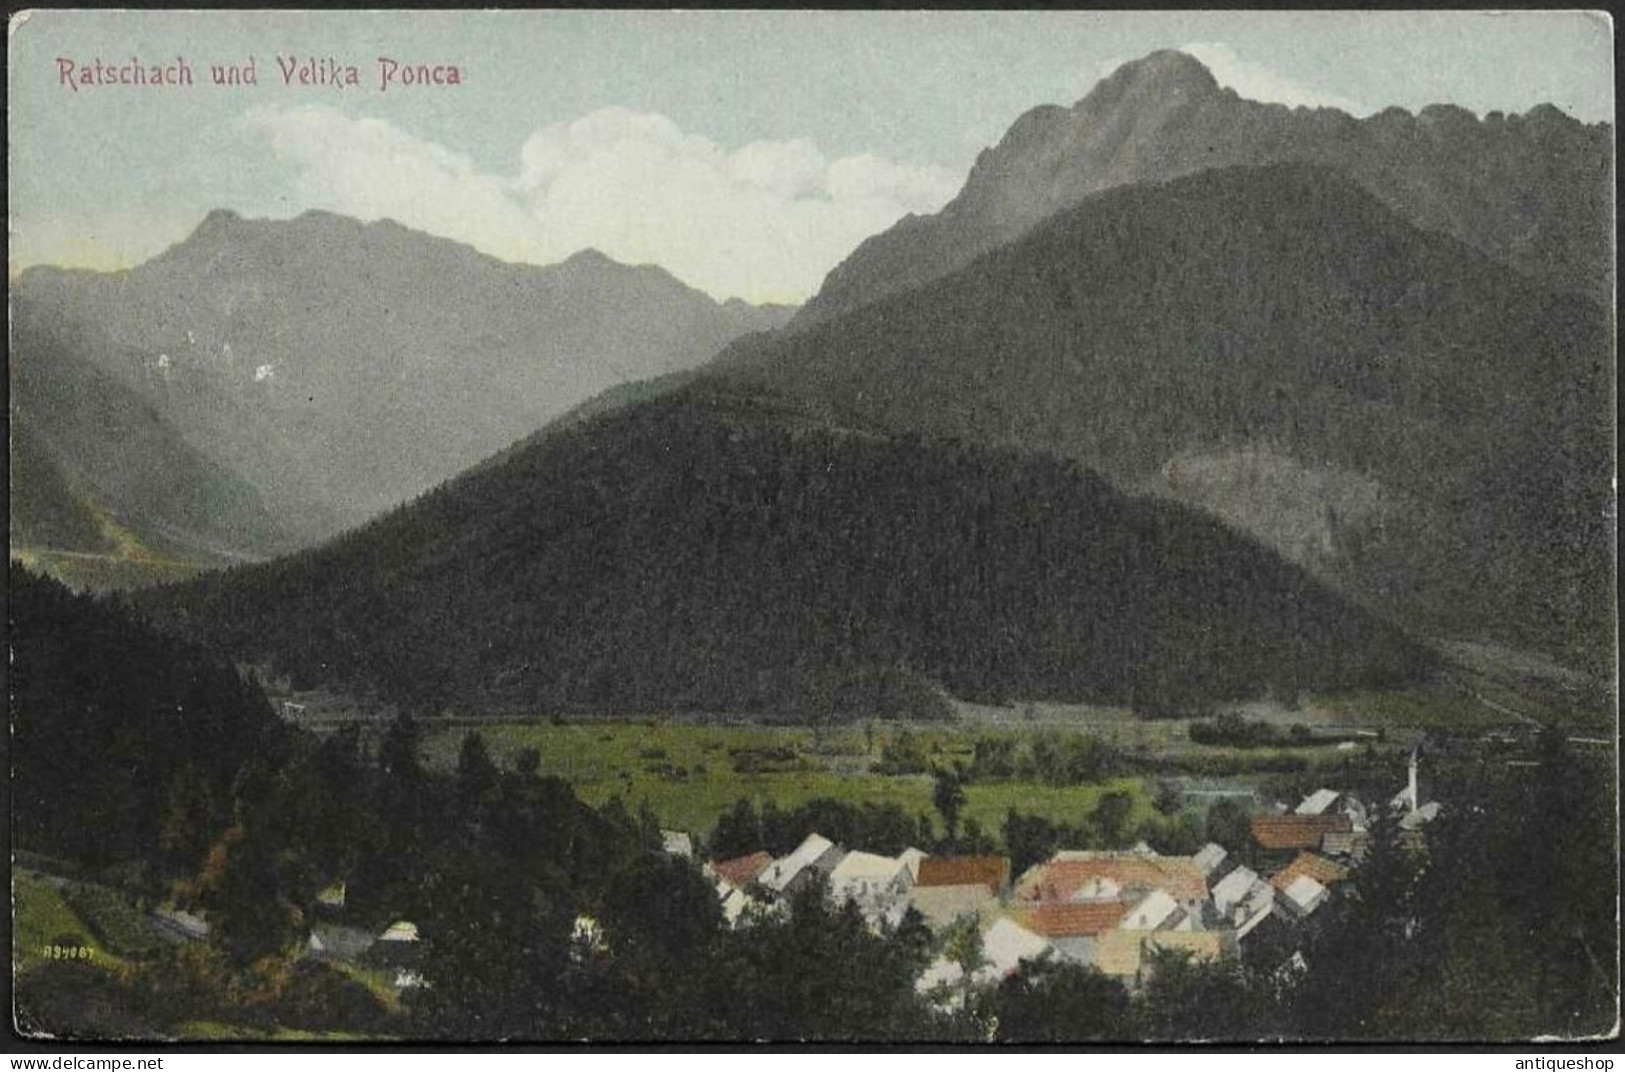 Slovenia-----Ratece-----old Postcard - Slowenien